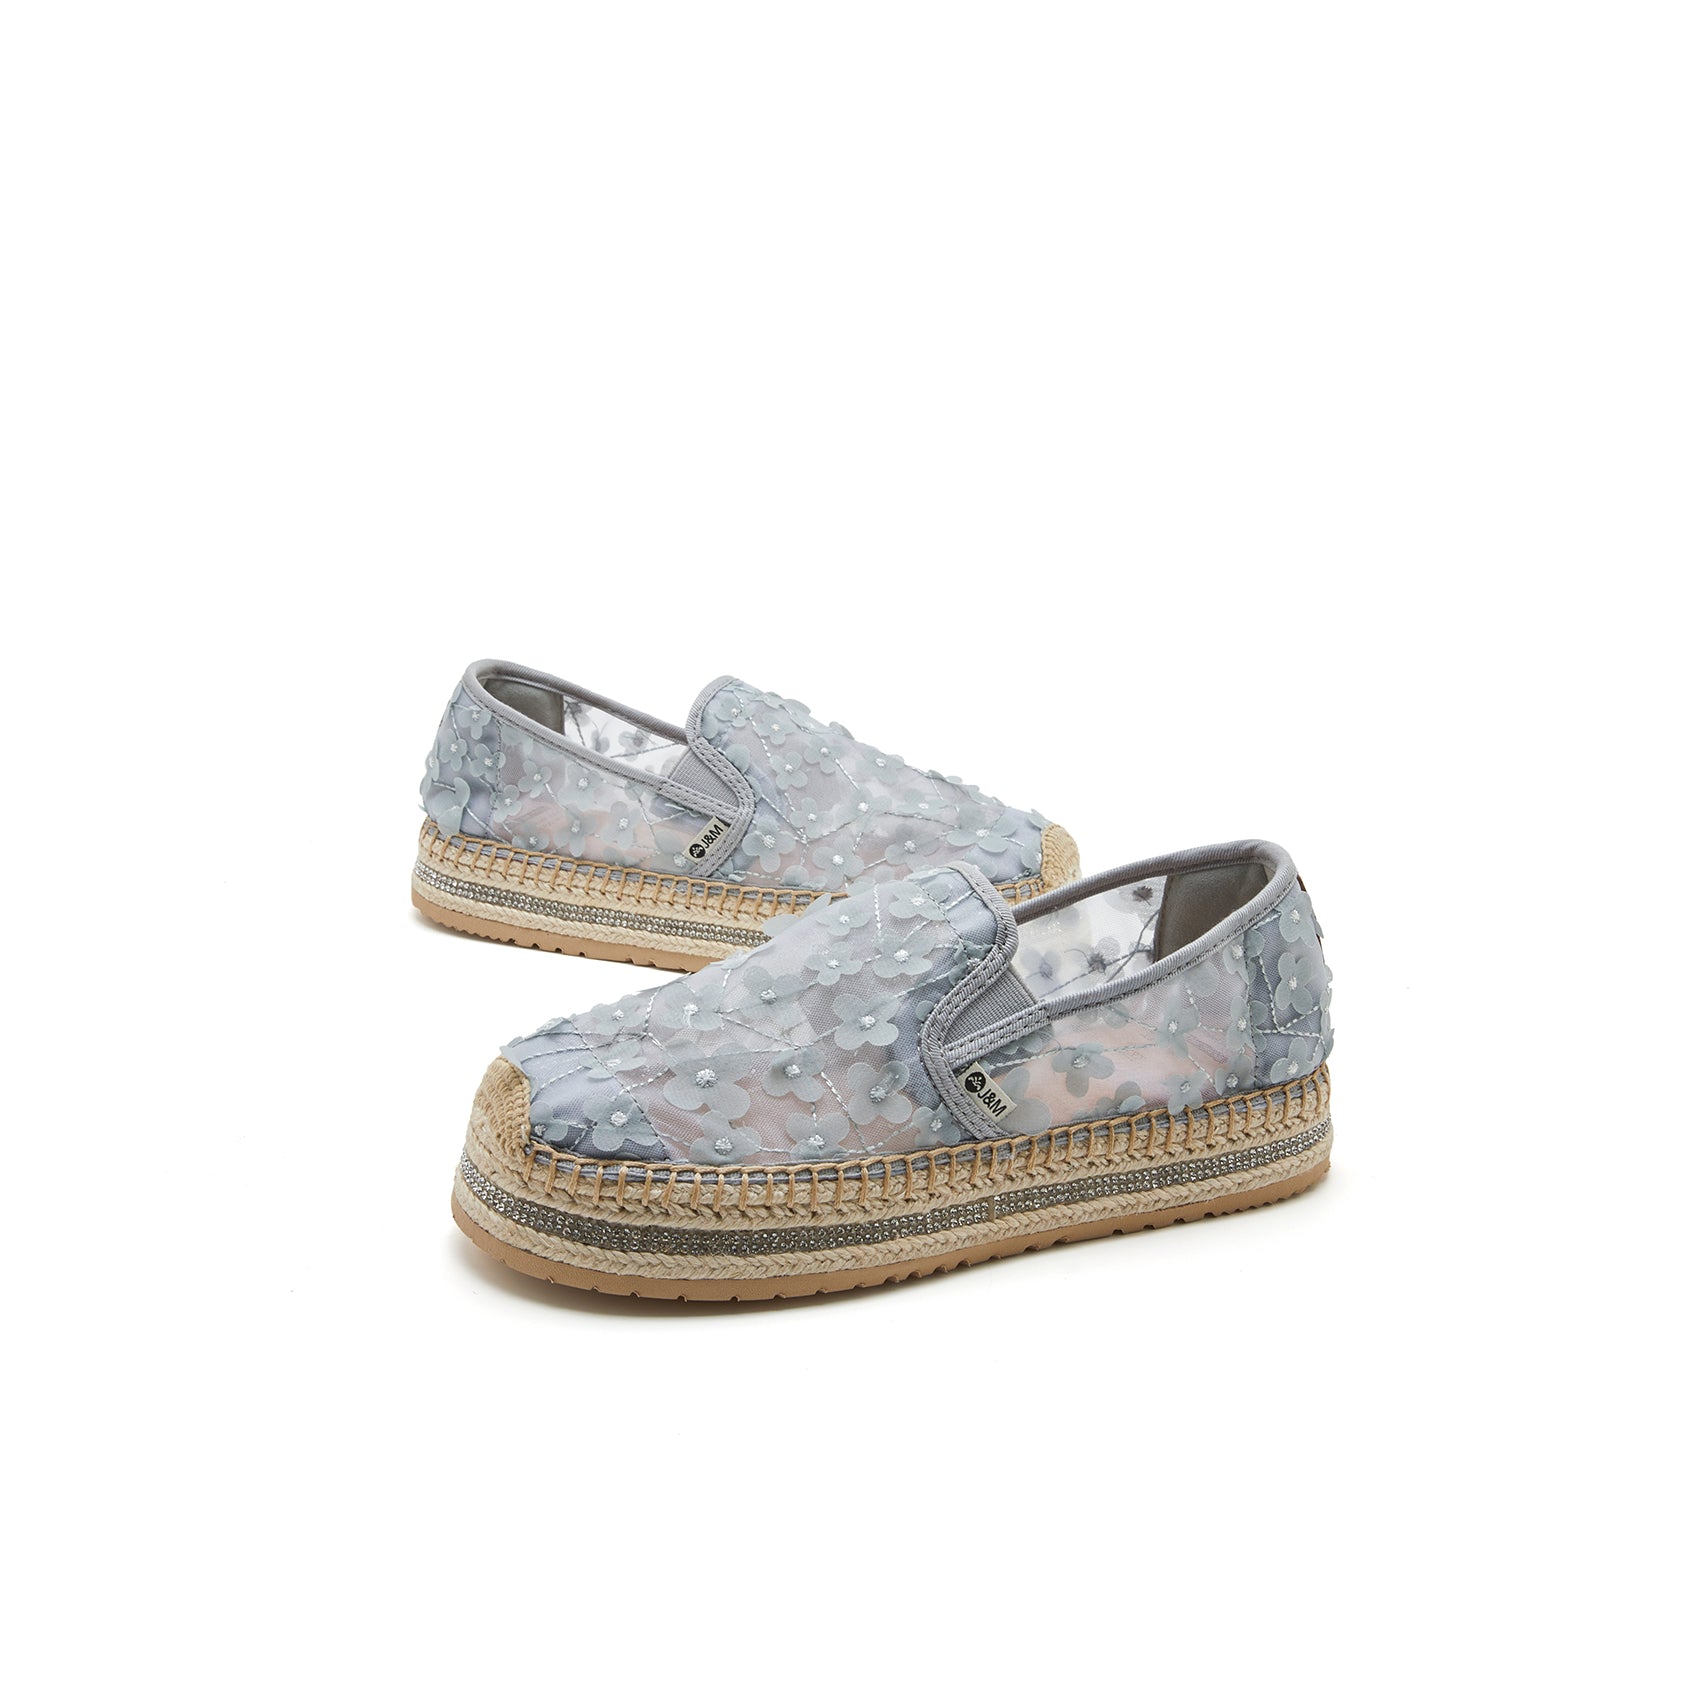 JOY&MARIO Handmade Women’s Slip-On Espadrille Mesh Loafers Flats in Grey-05356W